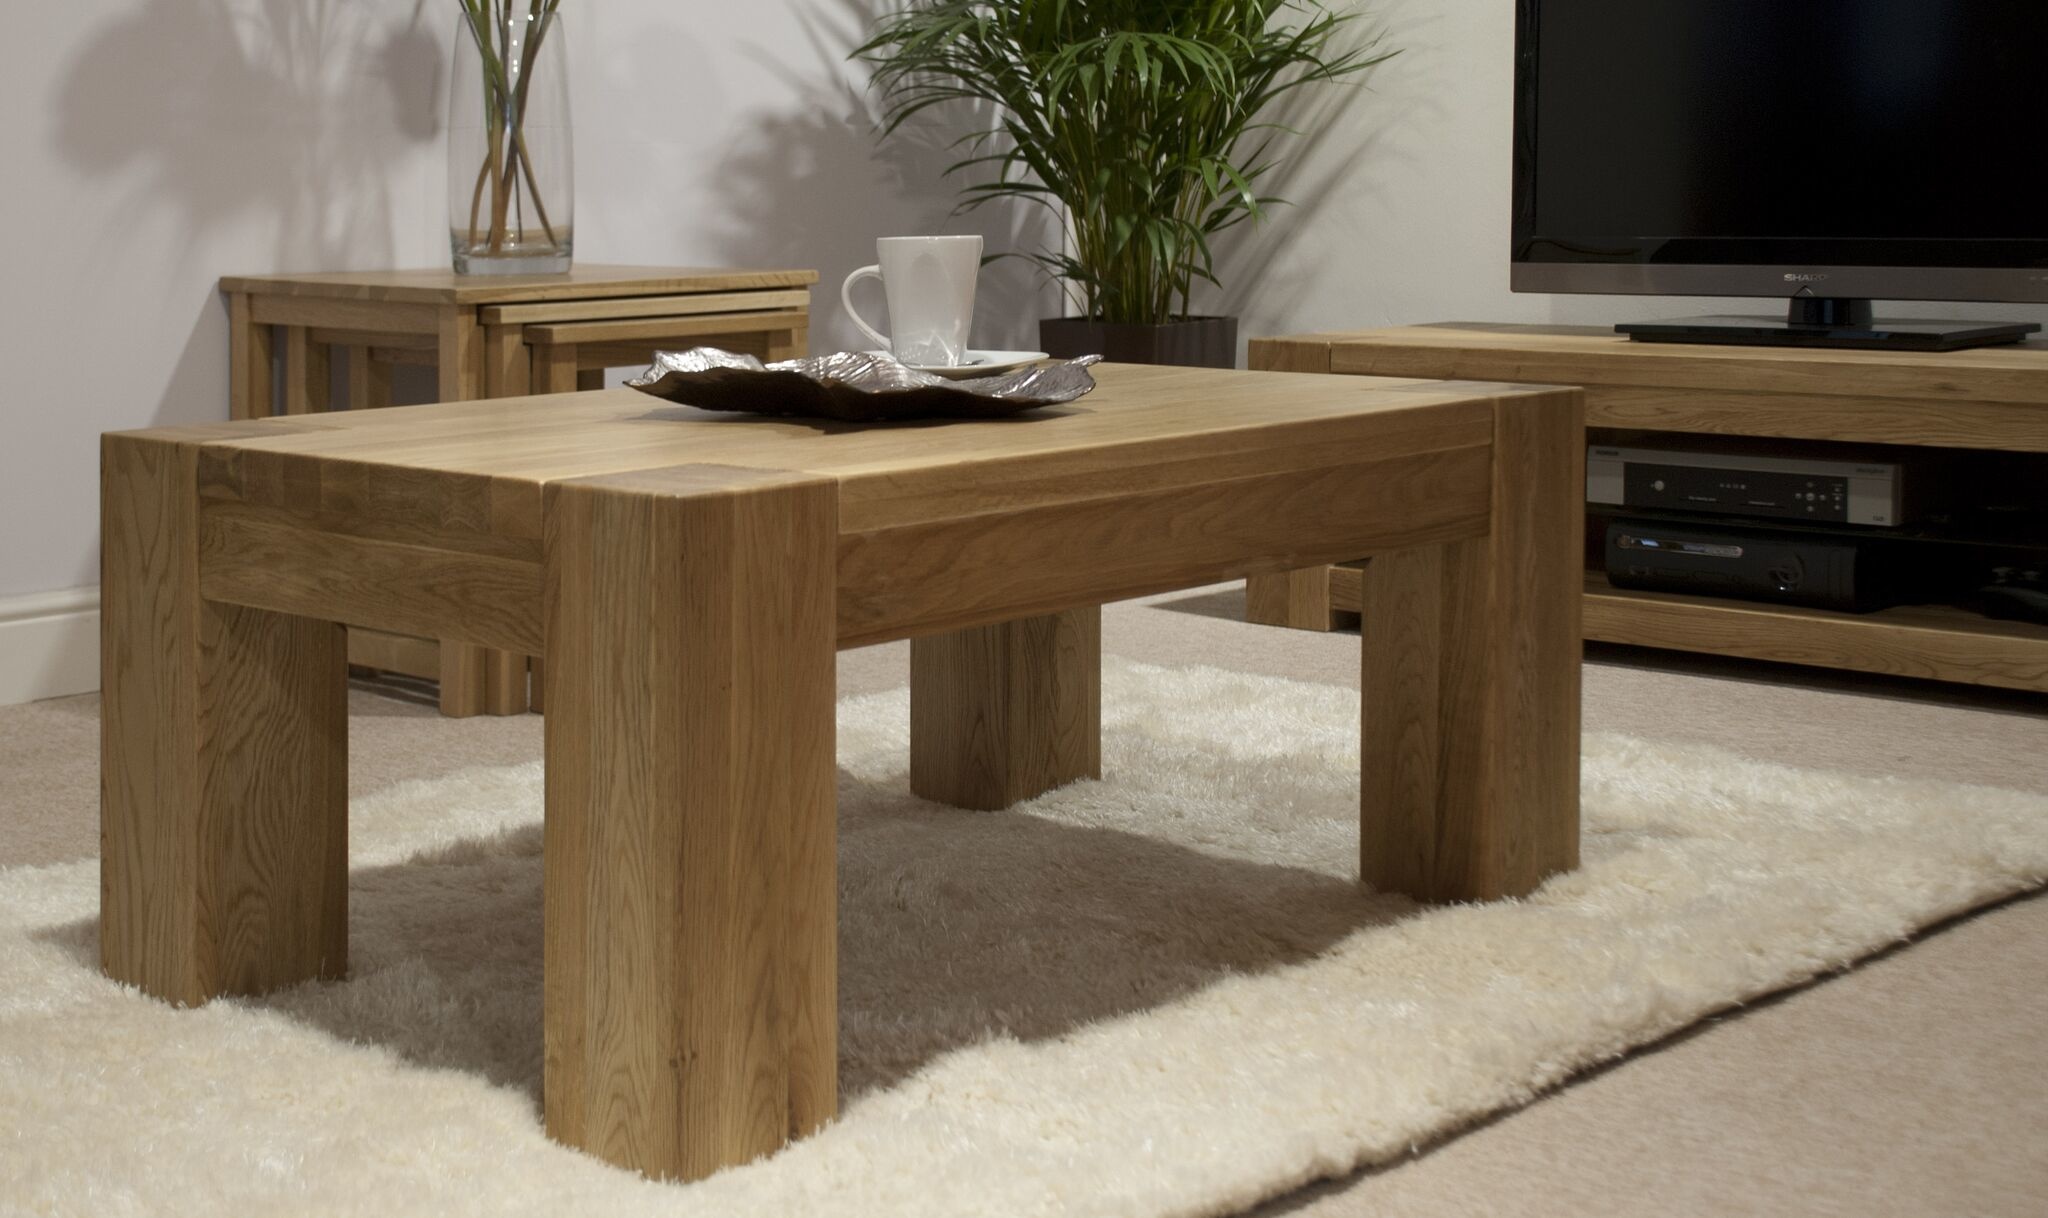 HomestyleGB Trend Oak 4 x 2 Coffee Table